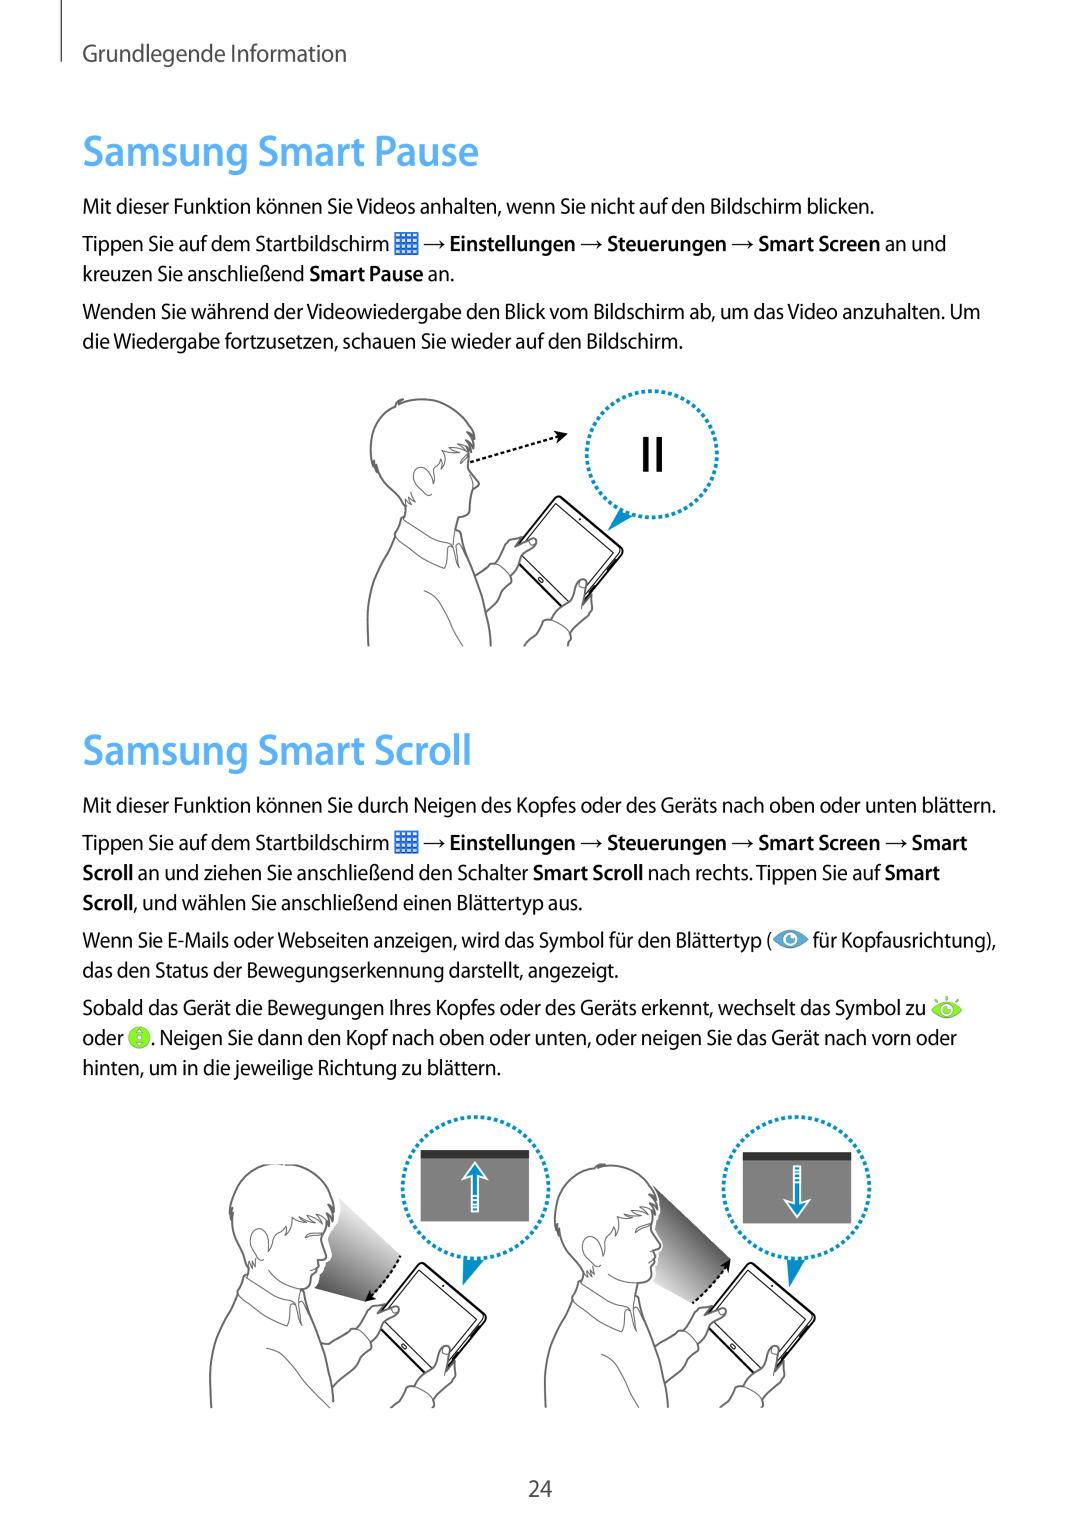 Samsung SM-P6000ZKADBT, SM-P6000ZWAXEO, SM-P6000ZKEDBT Samsung Smart Pause, Samsung Smart Scroll, Grundlegende Information 